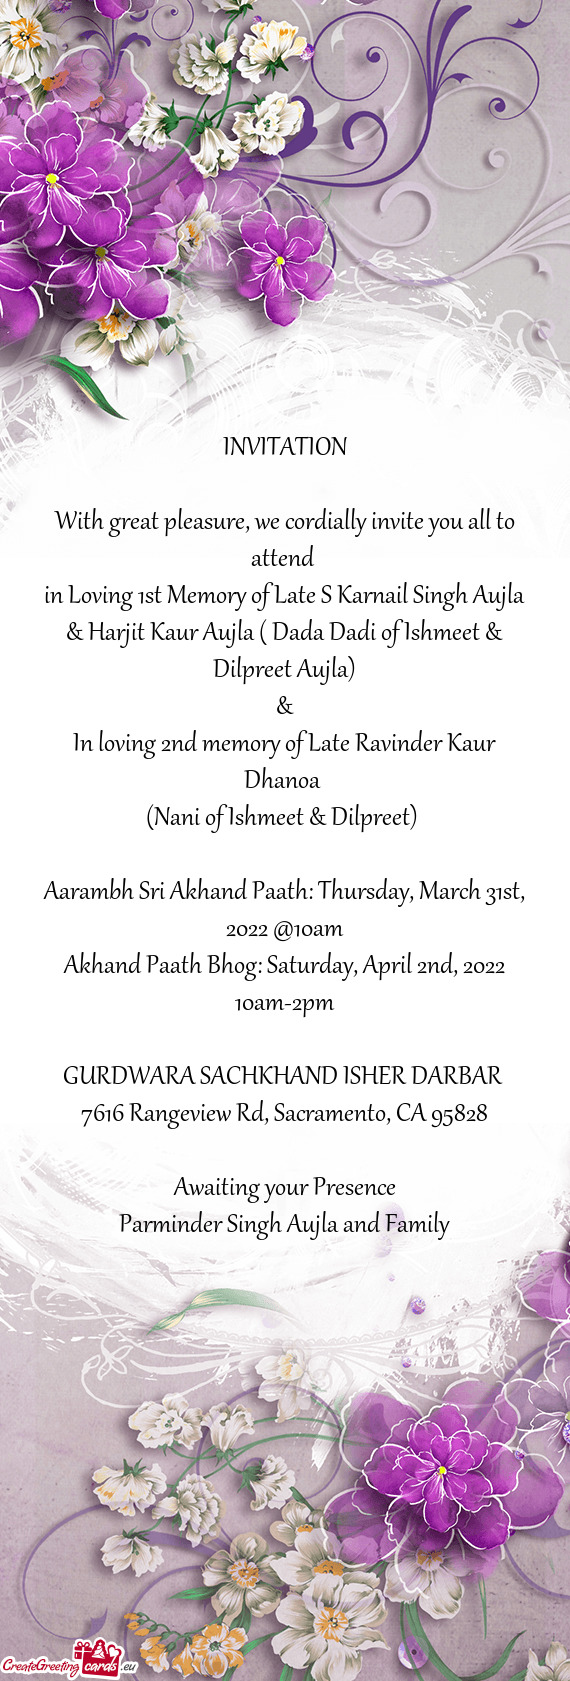 In Loving 1st Memory of Late S Karnail Singh Aujla & Harjit Kaur Aujla ( Dada Dadi of Ishmeet & Dilp